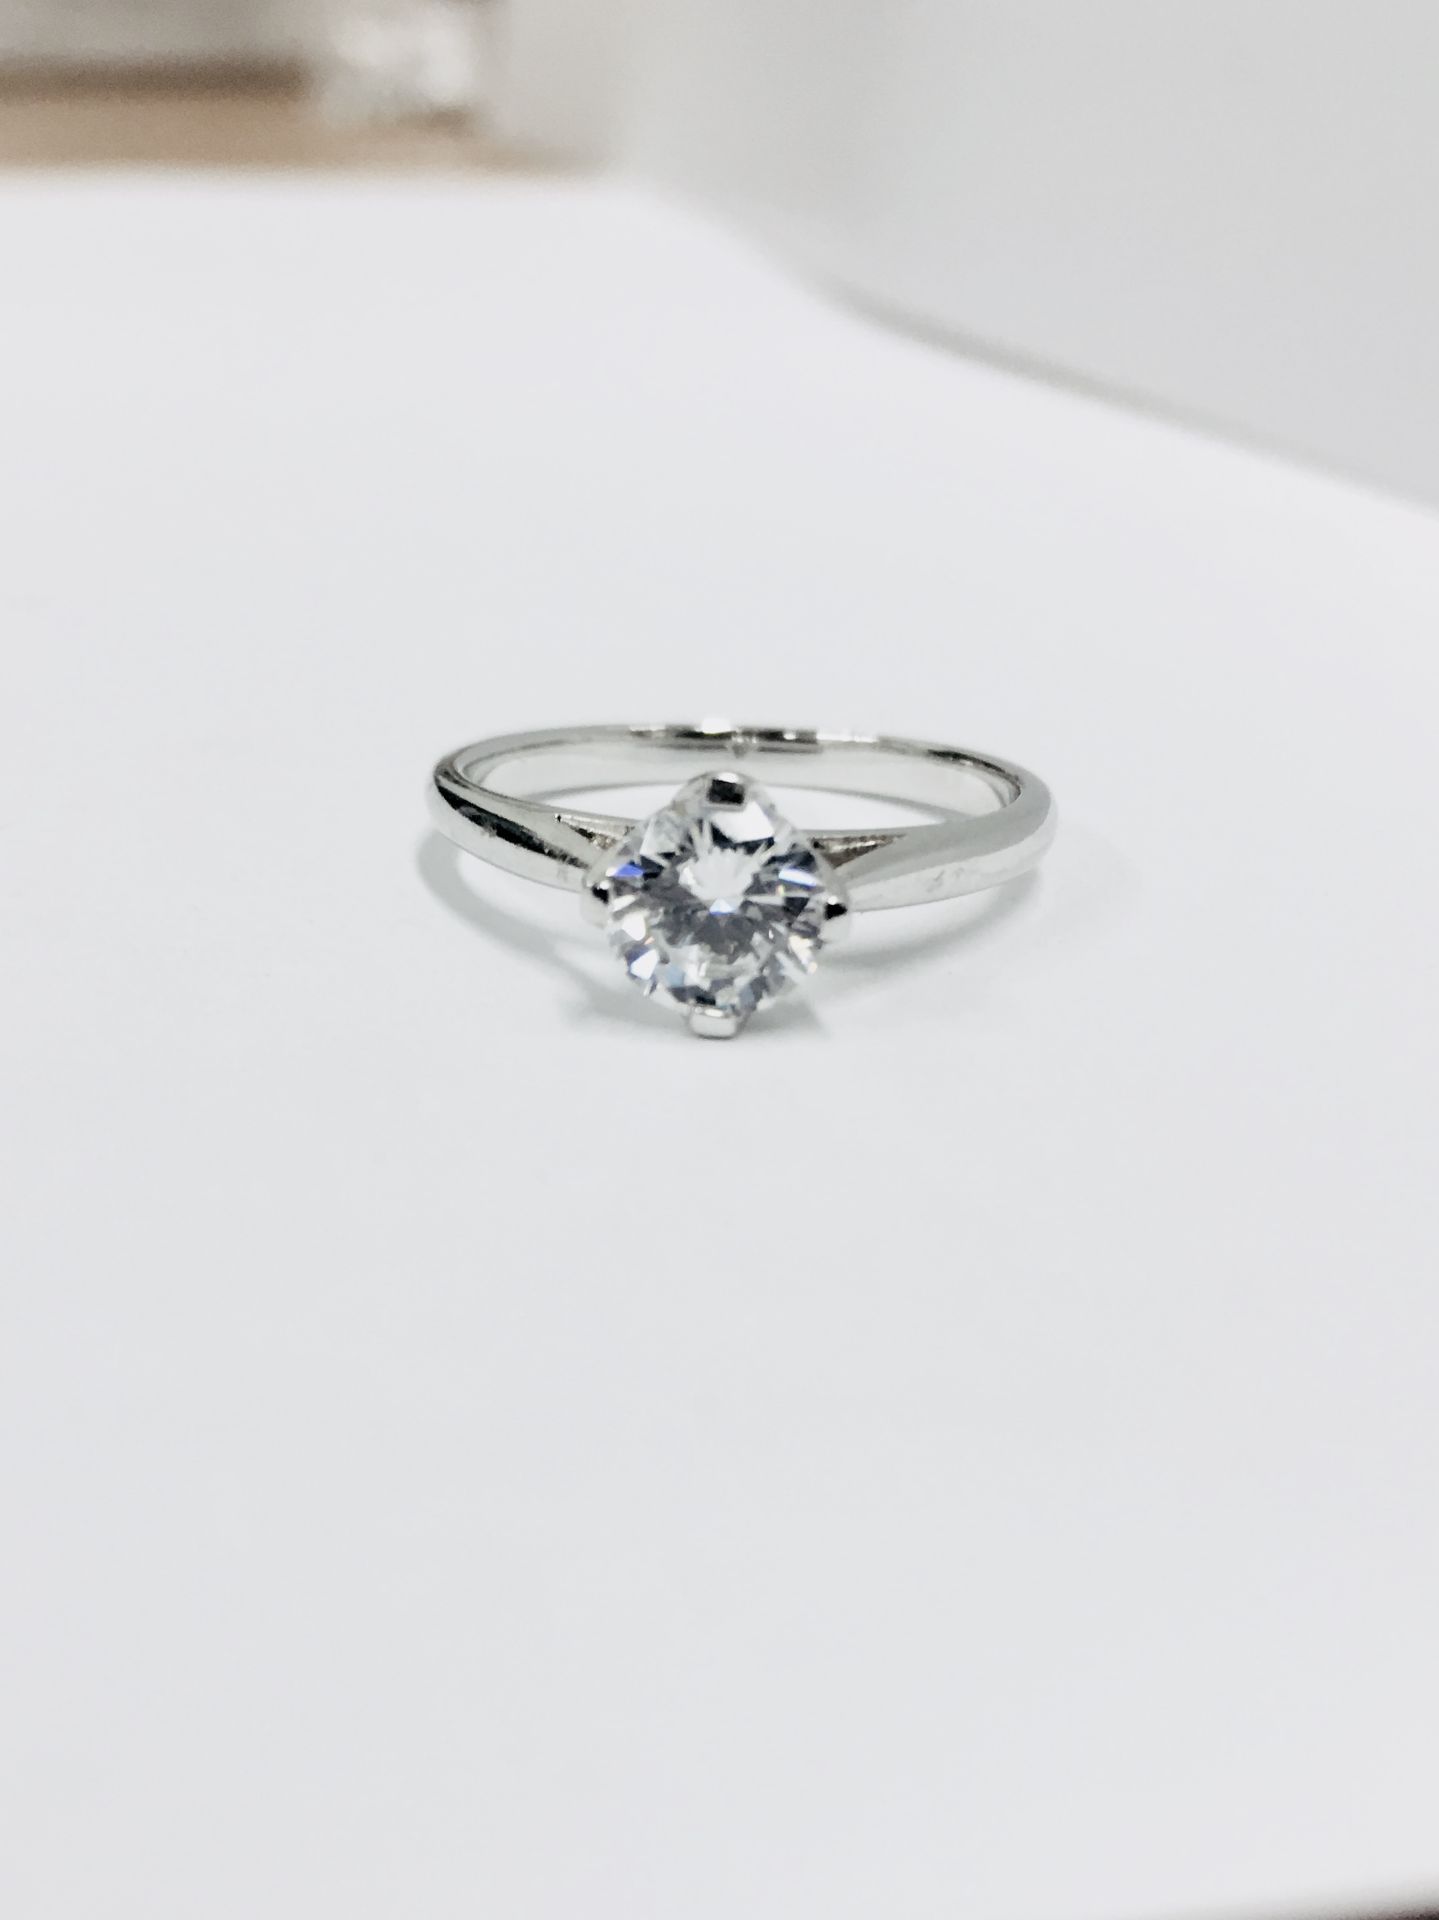 Platinum 4 claw diamond solitaire Ring,0.50ct brilliant cut diamond h colour vs clarity (clarity - Image 3 of 3